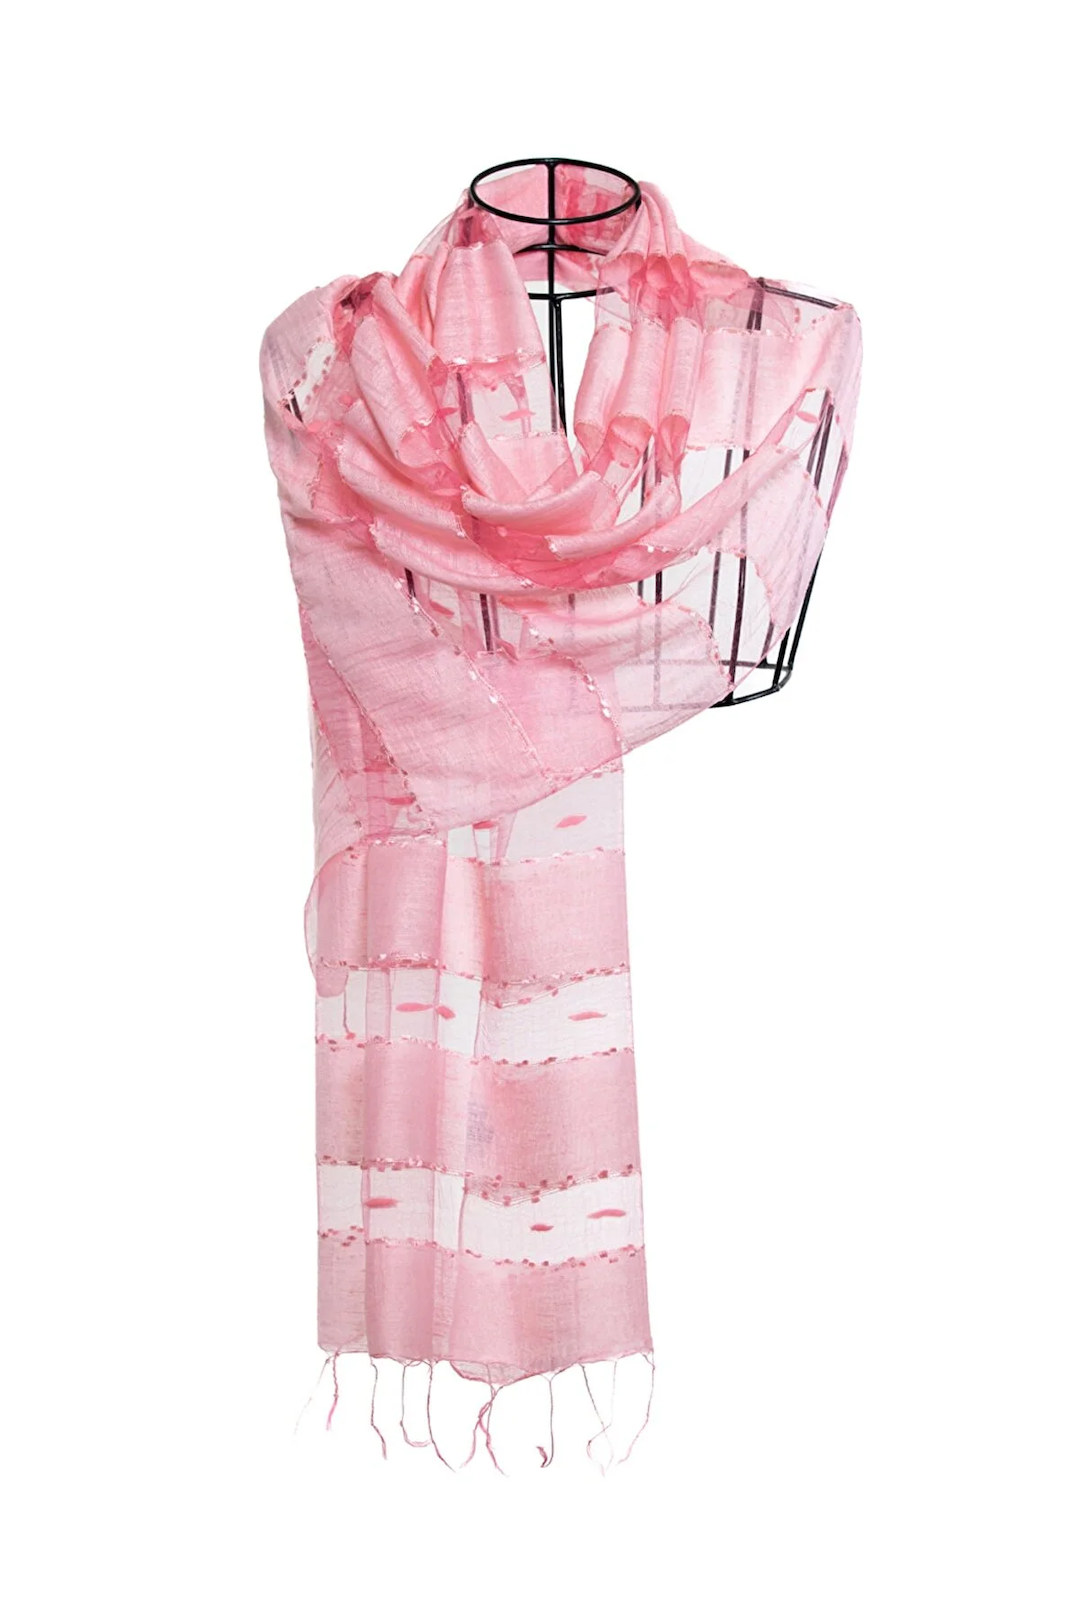 Silk Organza Sheer Uniform Colors - Pink